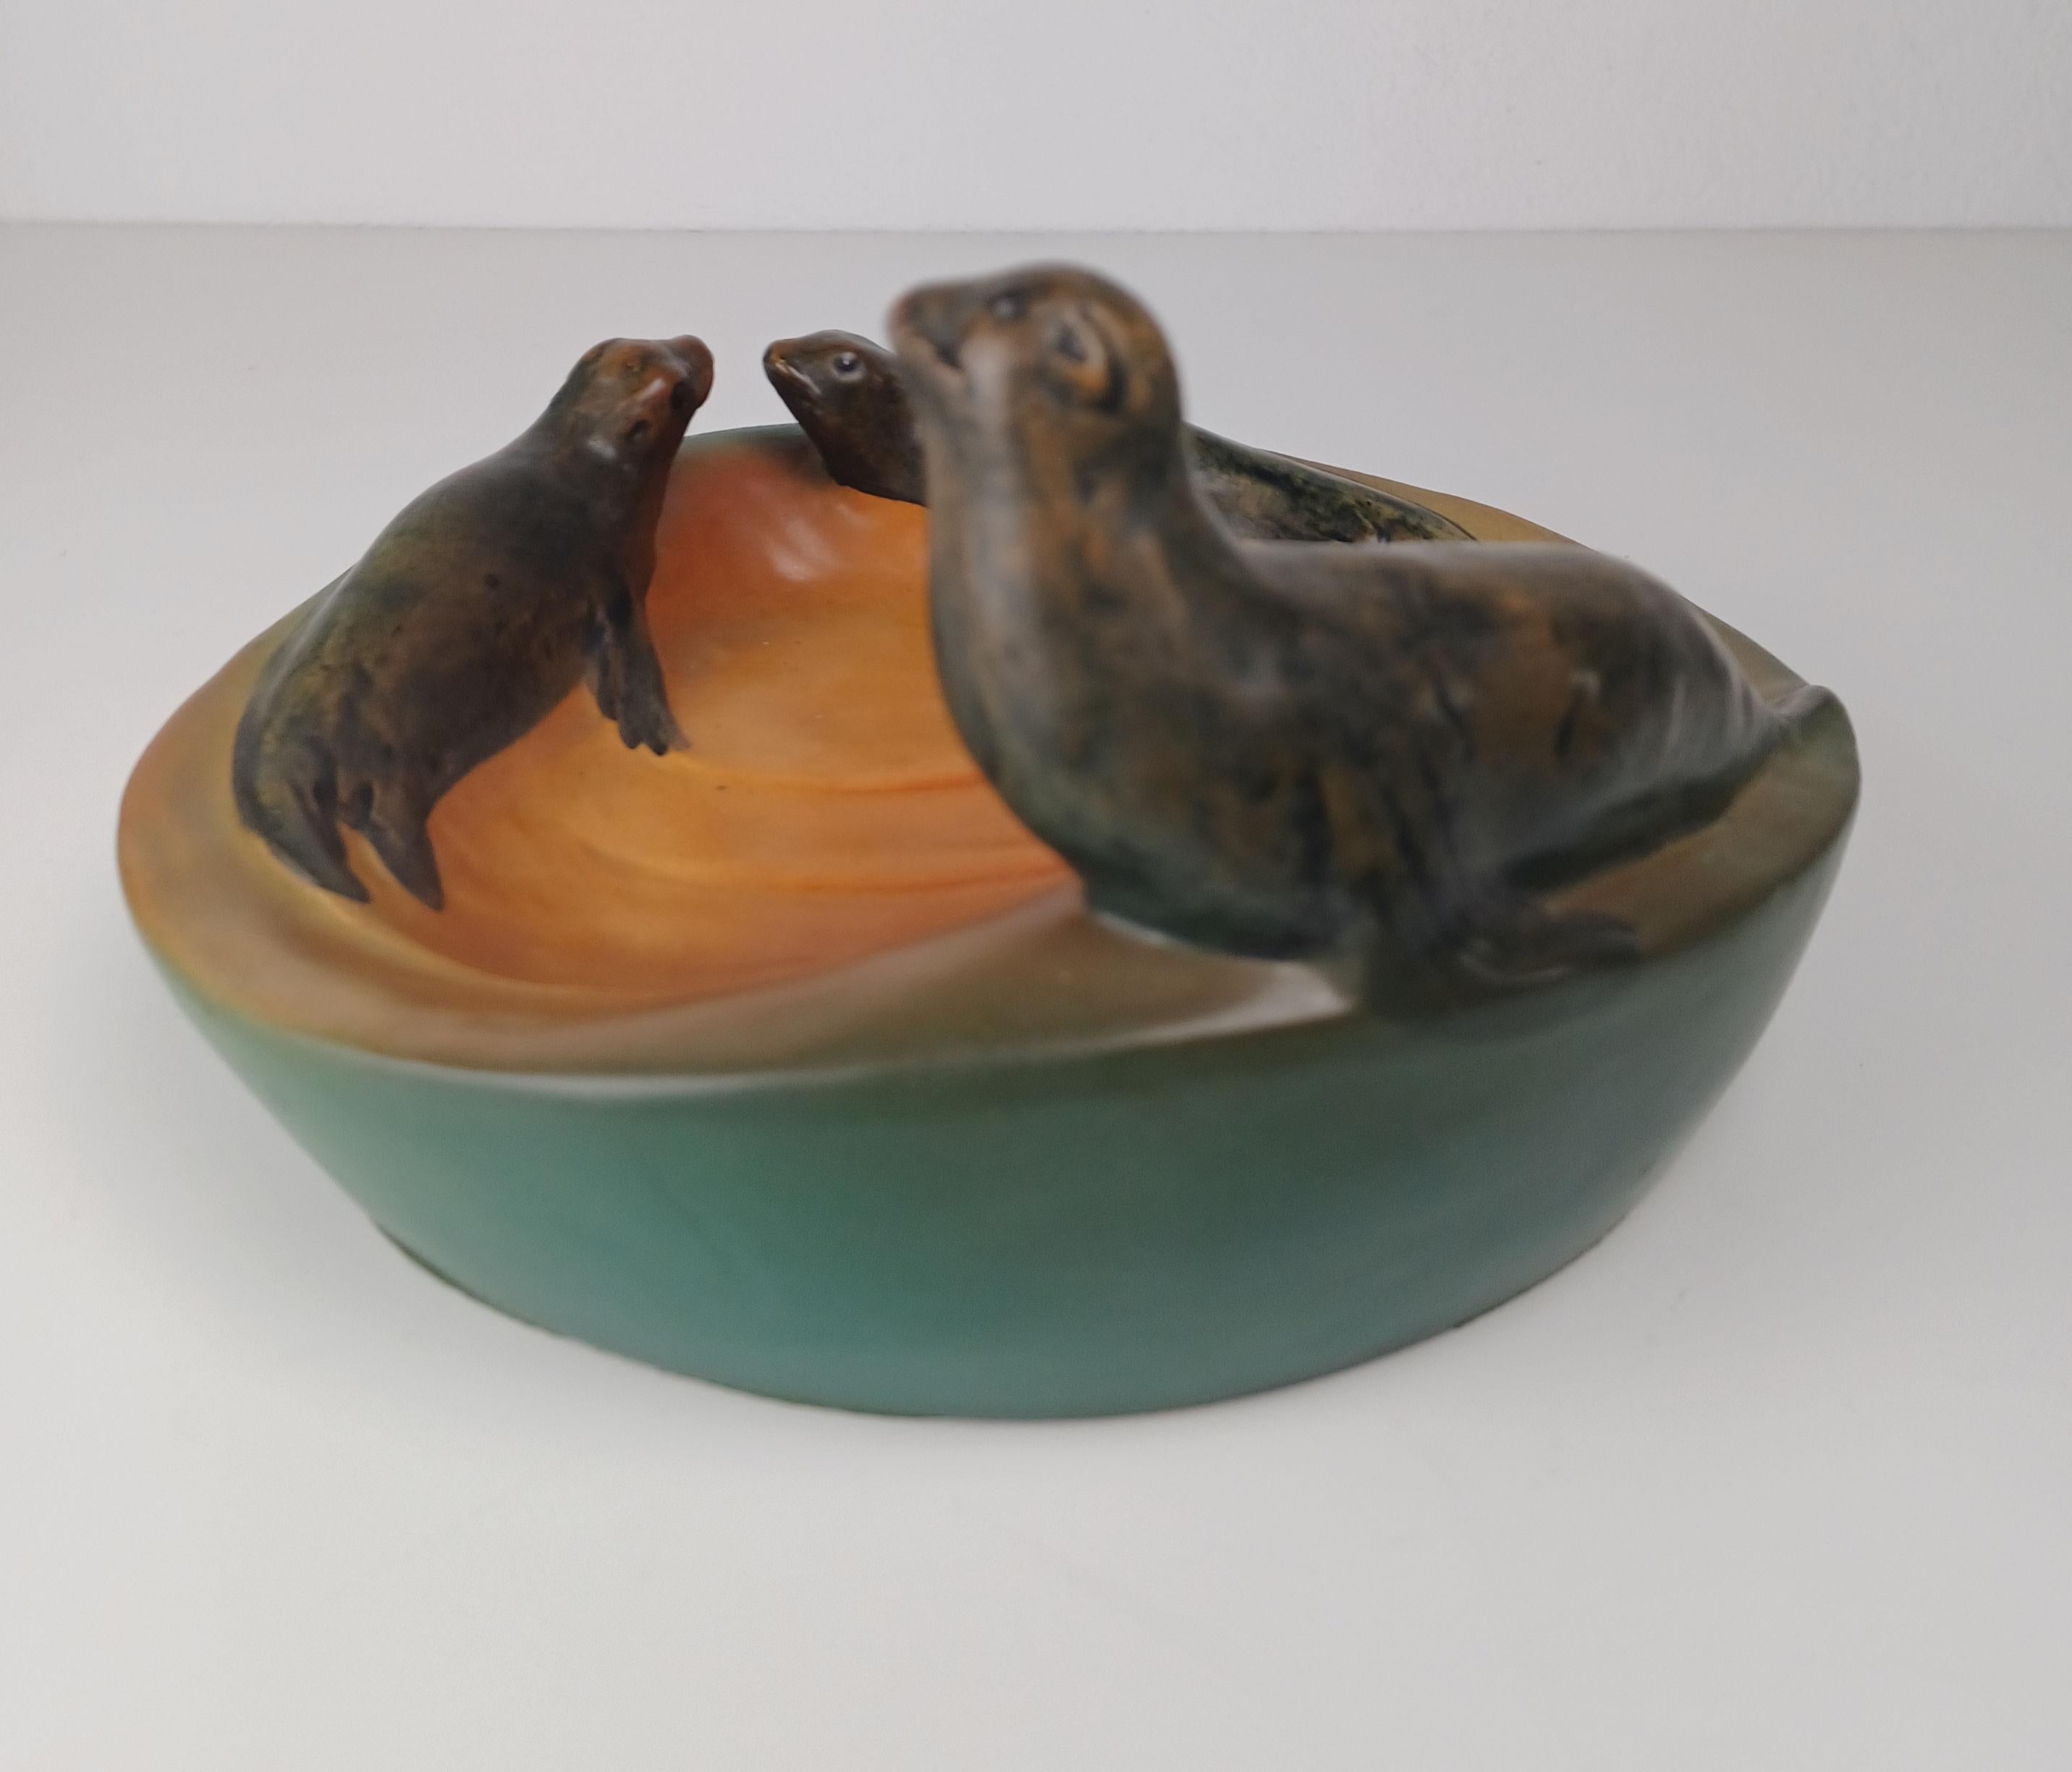 Ceramic 1910's Danish Art Nouveau Handcrafted Sealion Bowl - Ash Tray by P. Ipsens Enke For Sale